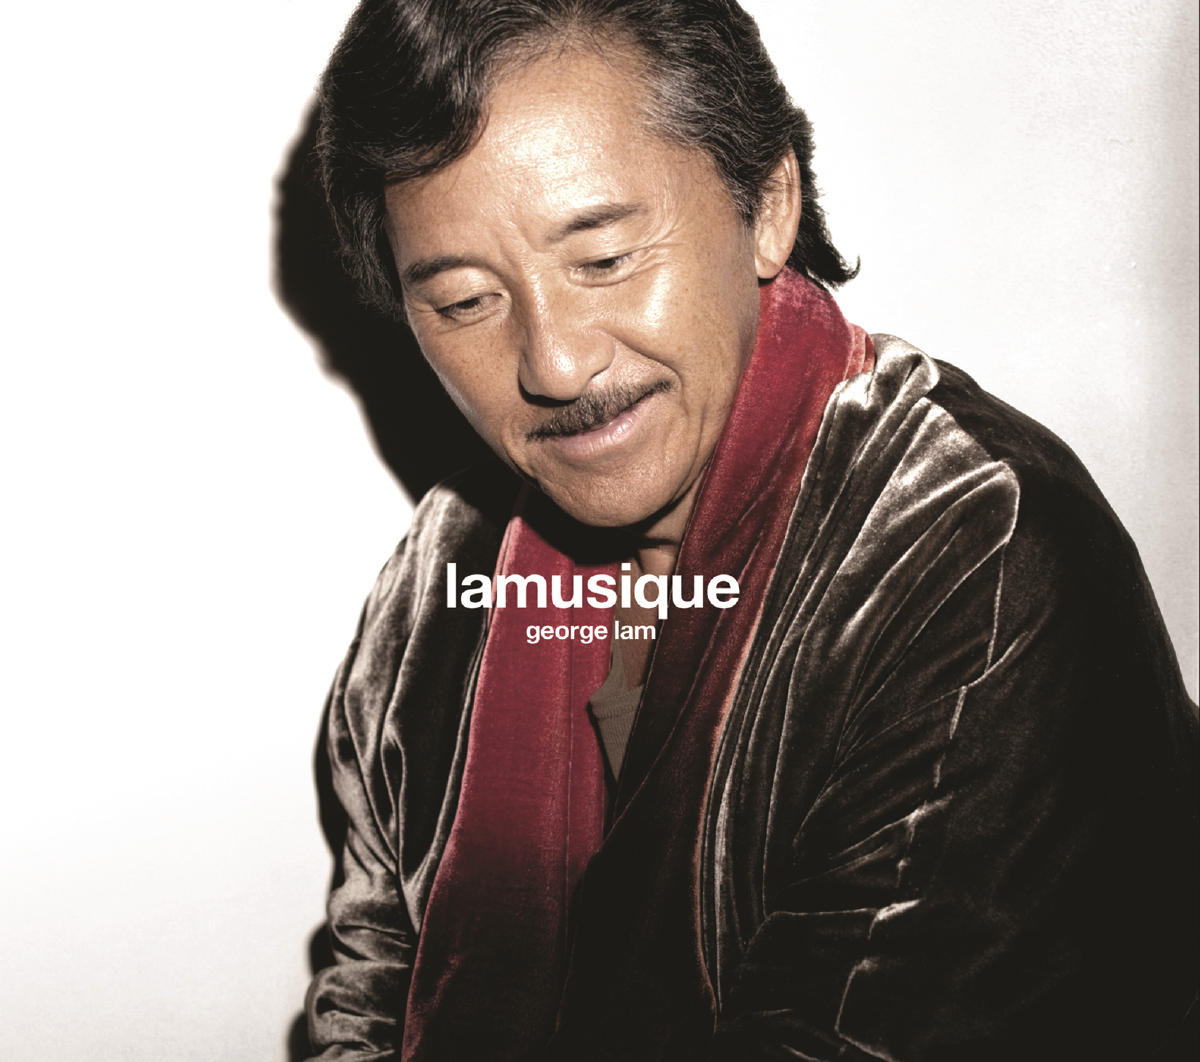 SoundHound - Lamusique by George Lam